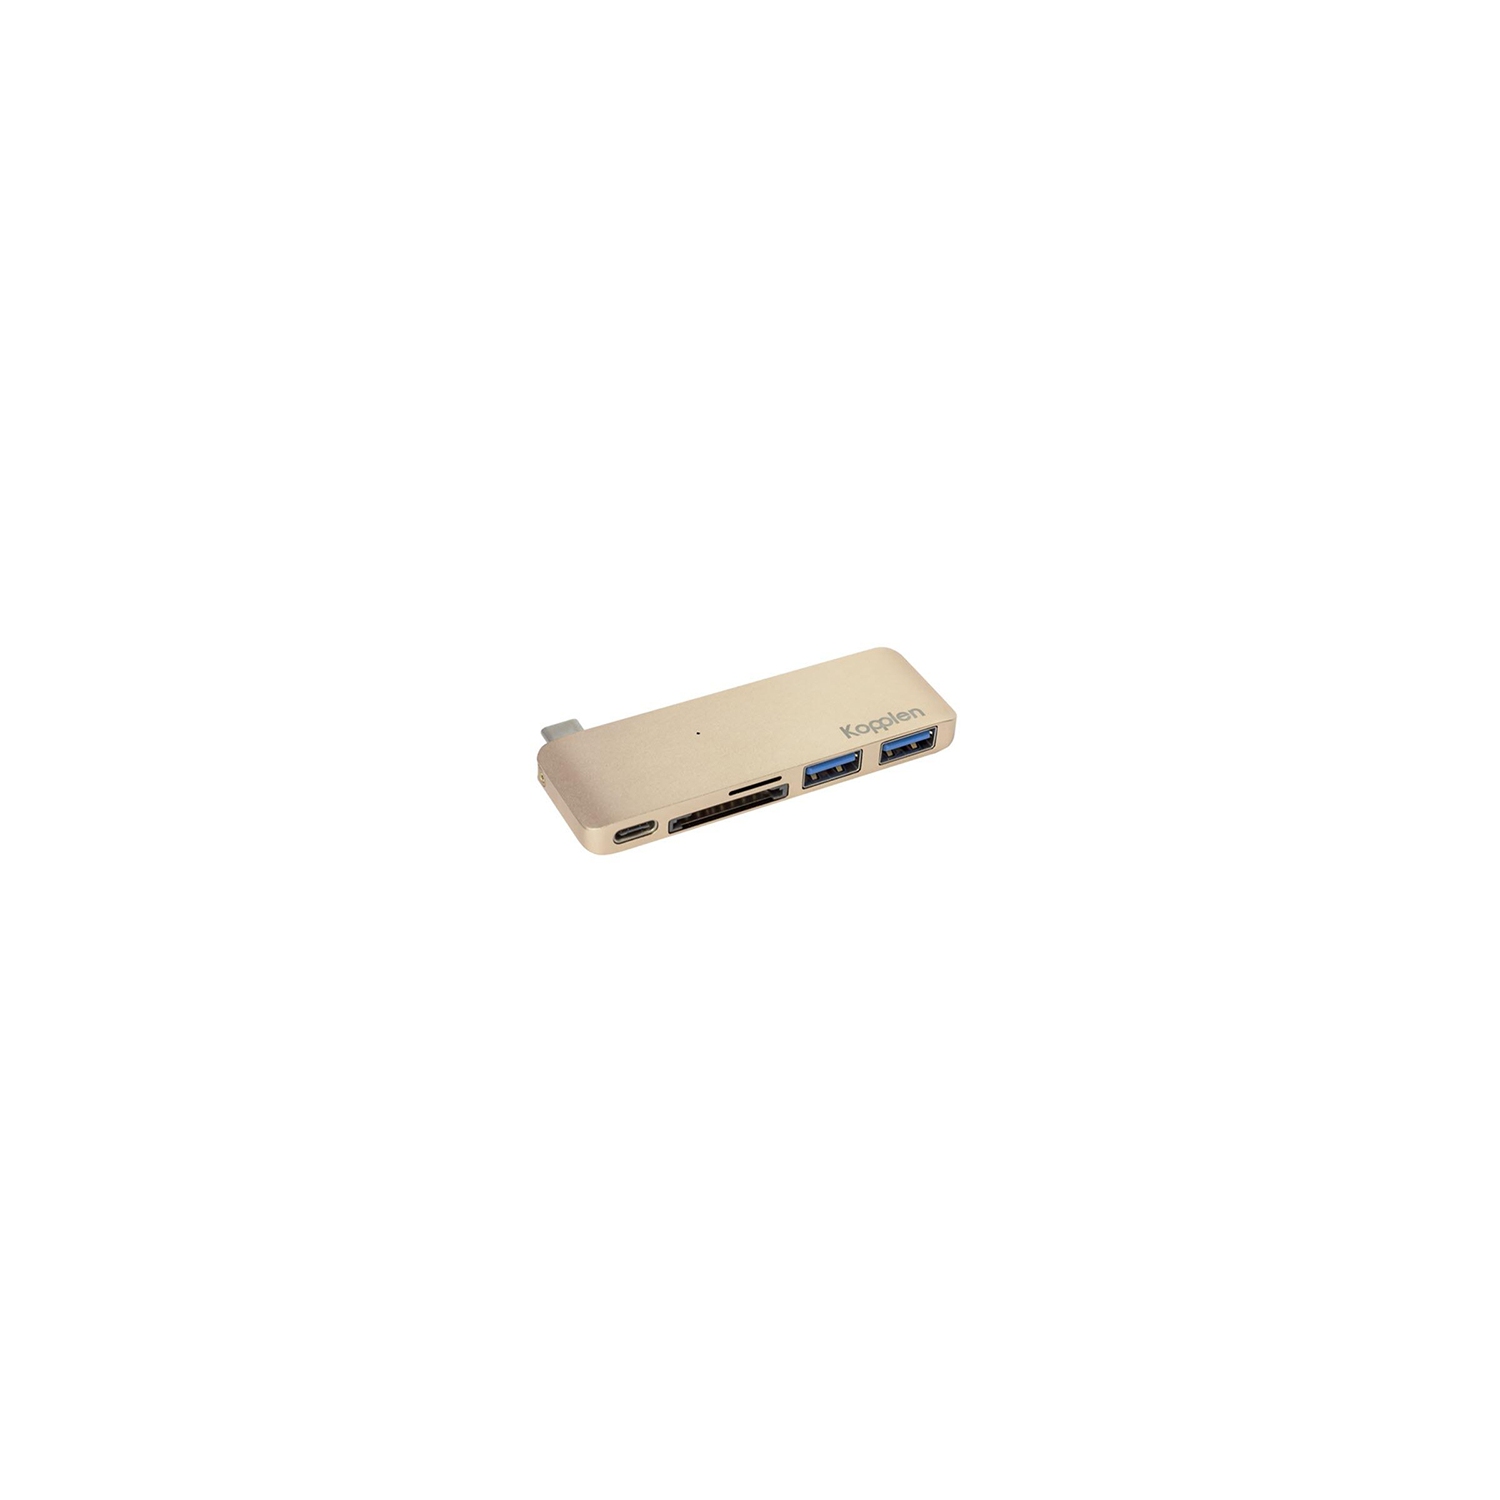 Kopplen Type-C USB Powered Multi Hub, 2x USB 3.0 Ports, SD + Micro-SD Card Reader Support Macbook - Aluminum Matte Gold